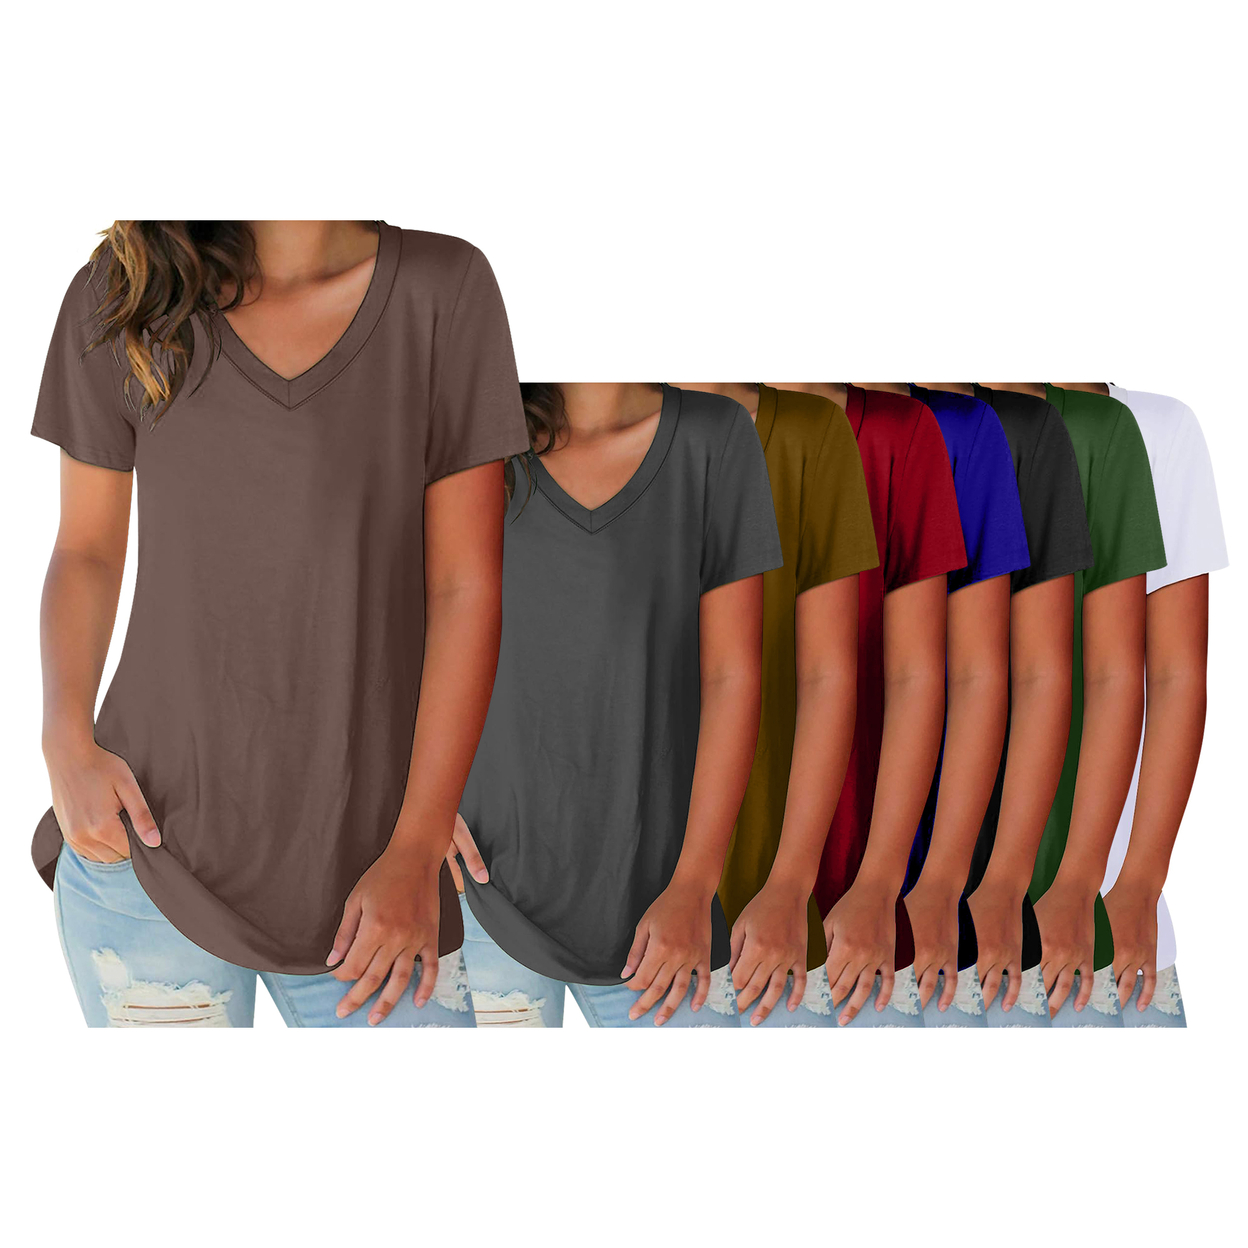 Women's Ultra-Soft Smooth Cotton Blend Basic V-Neck Short Sleeve Shirts - Green, Large